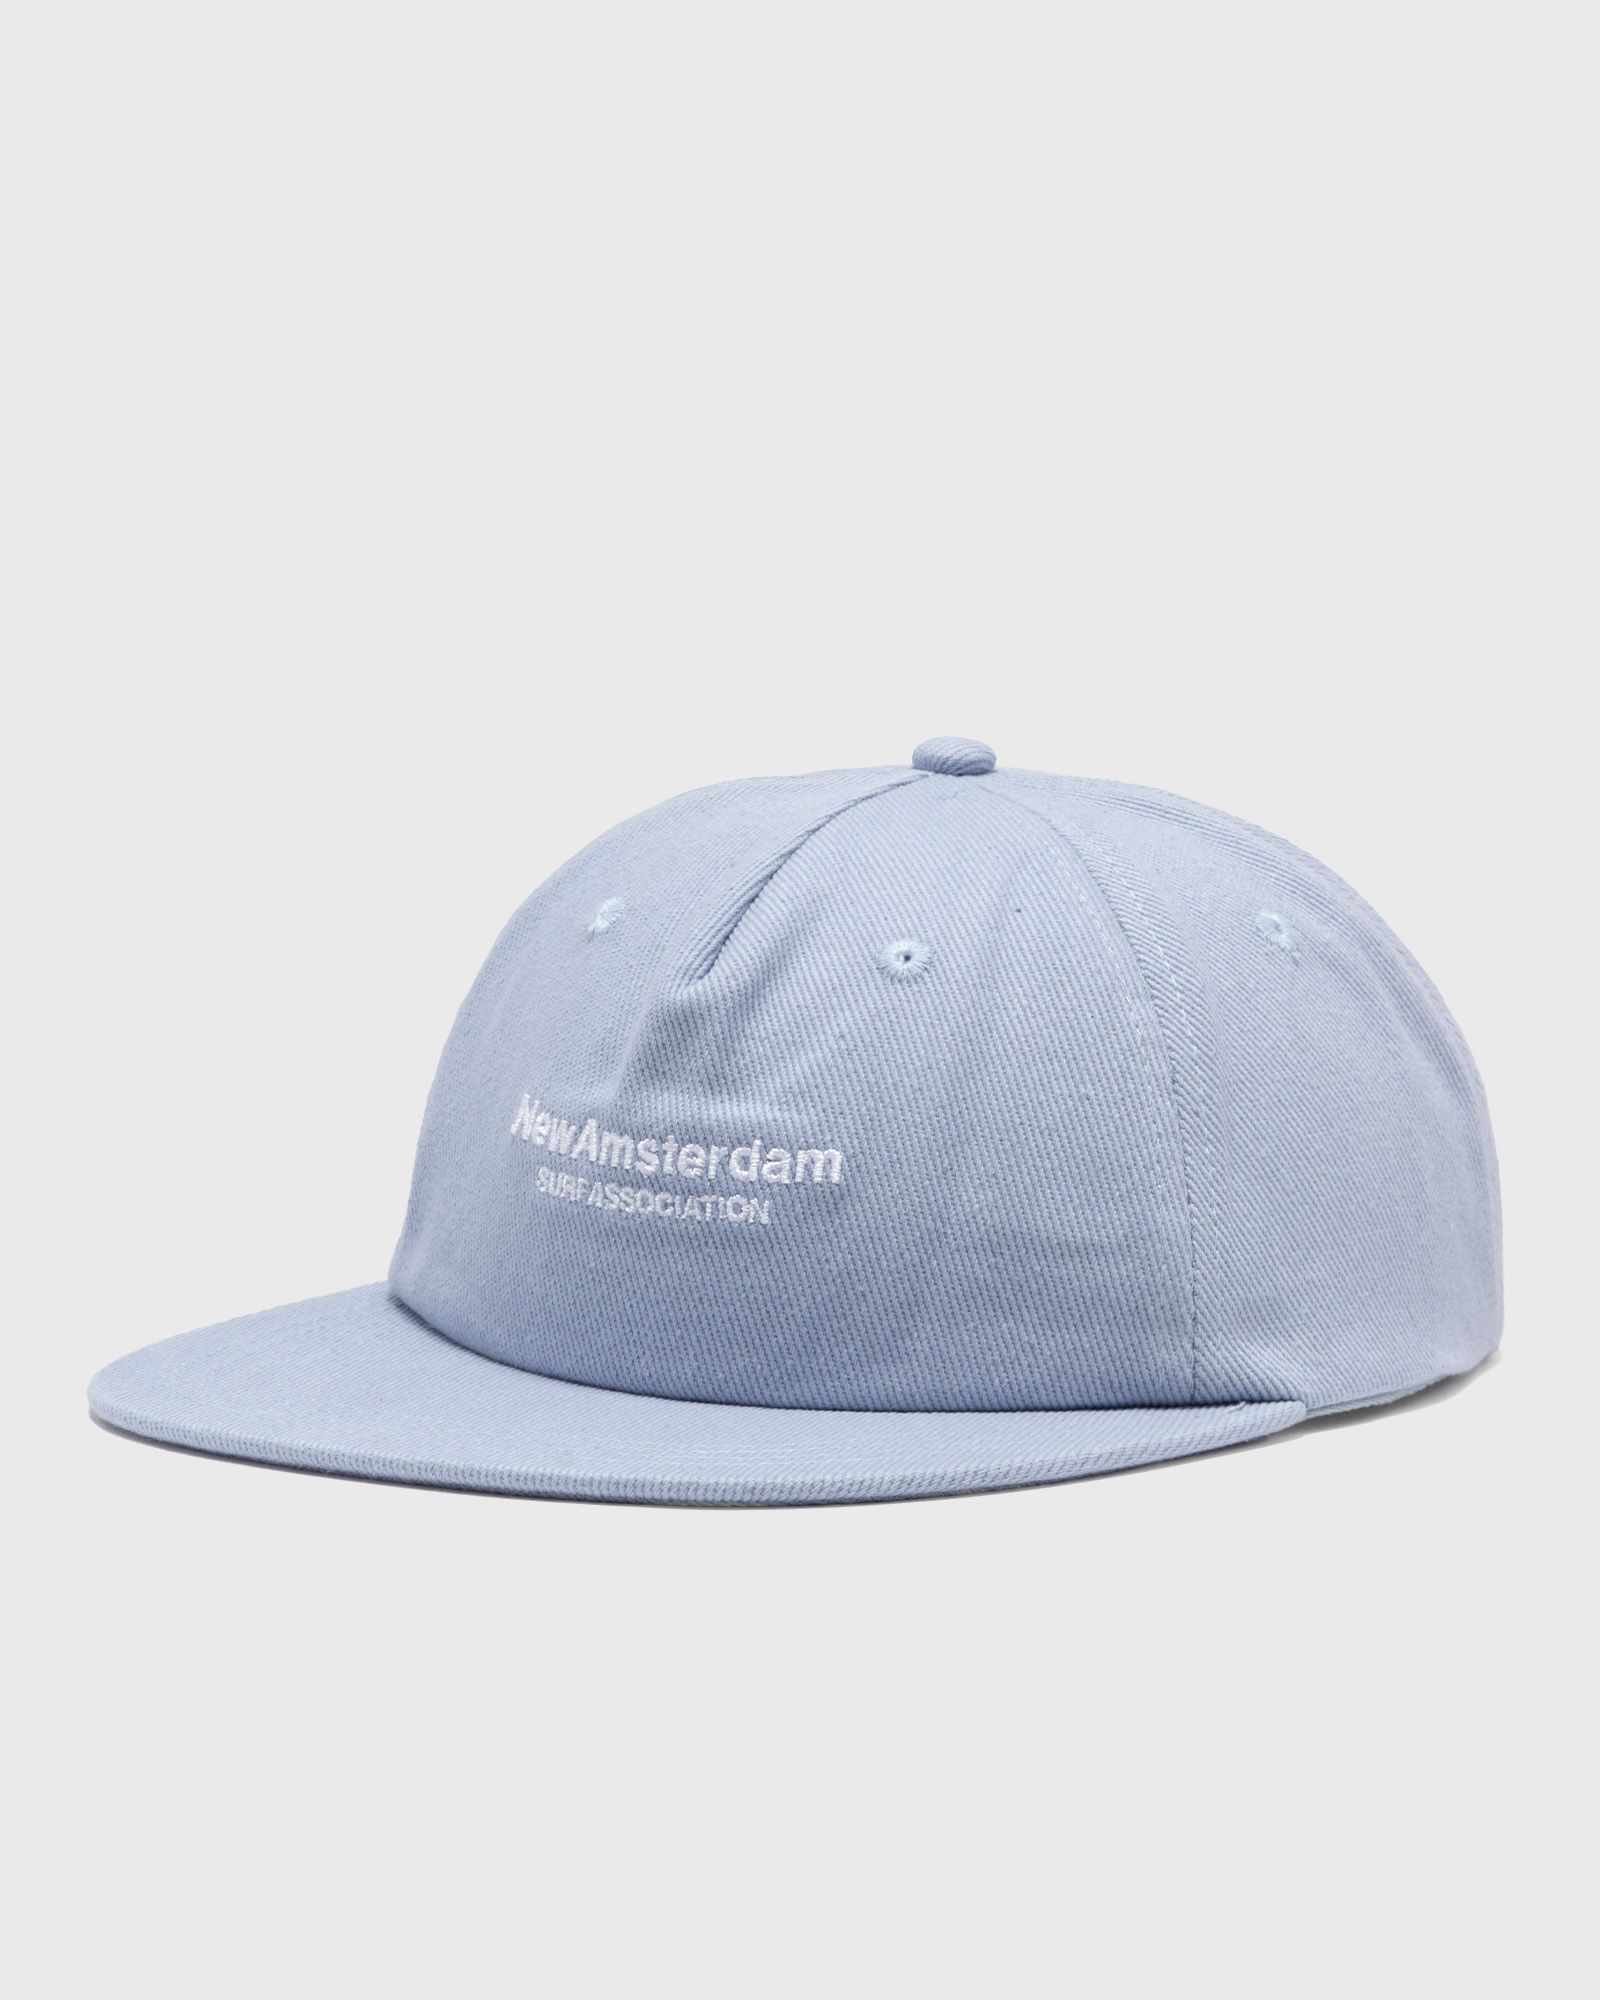 New Amsterdam - name cap men caps blue in größe:s